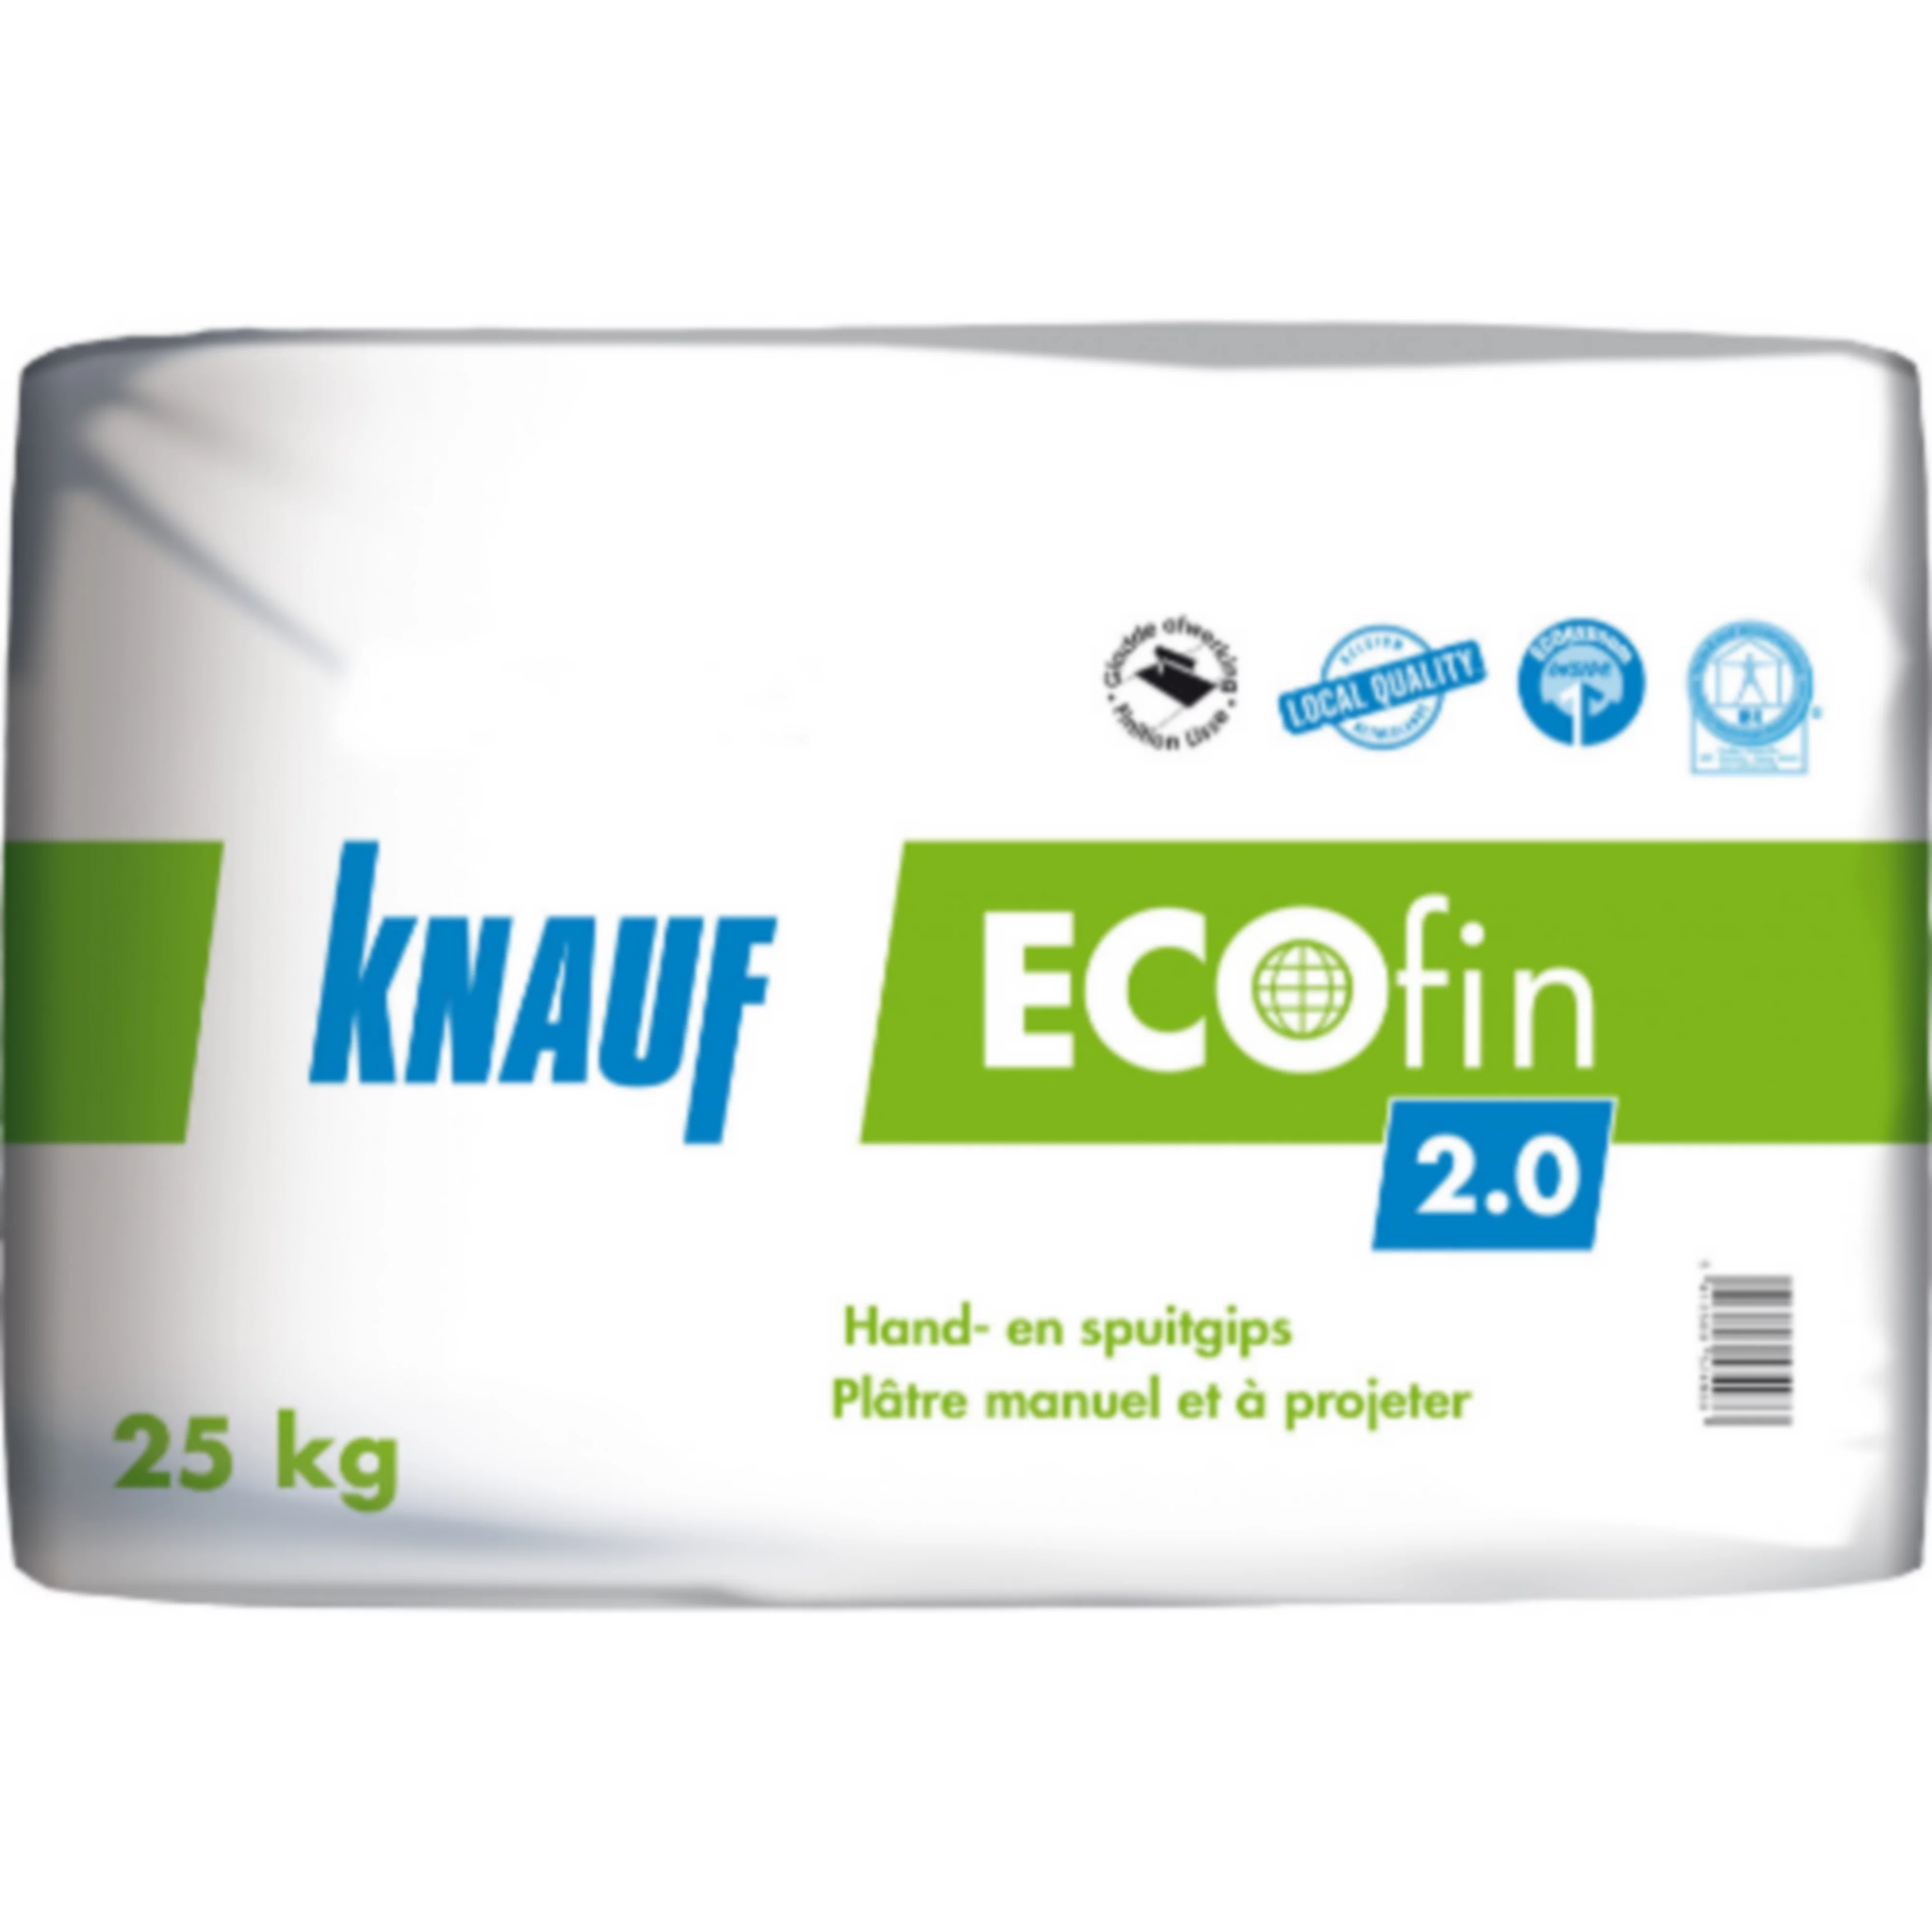 Ecofin2.0 500